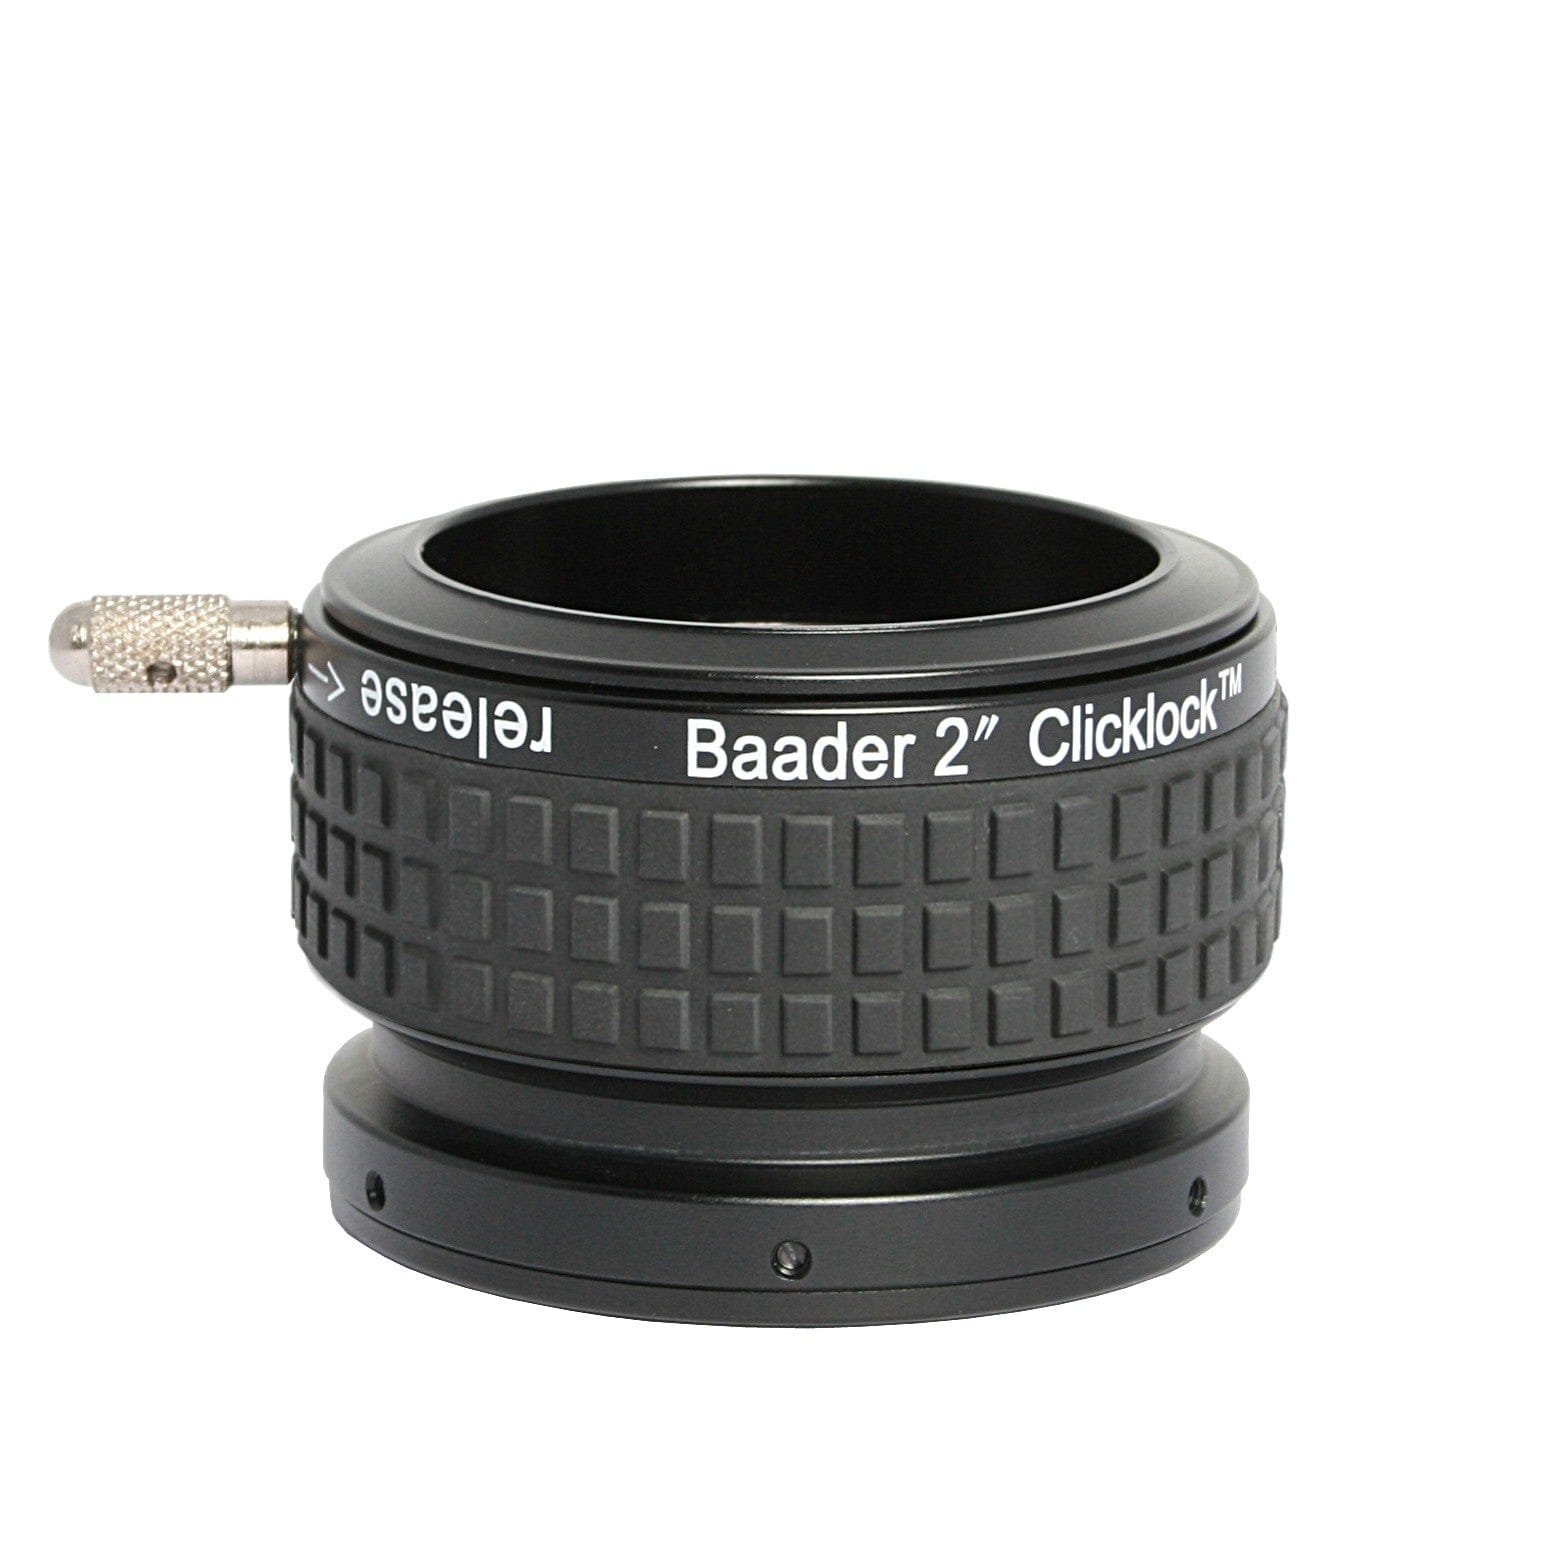 Baader Planetarium Accessory Baader 2" Clicklock Clamp for SCT (internal 2" Thread) - 2956220